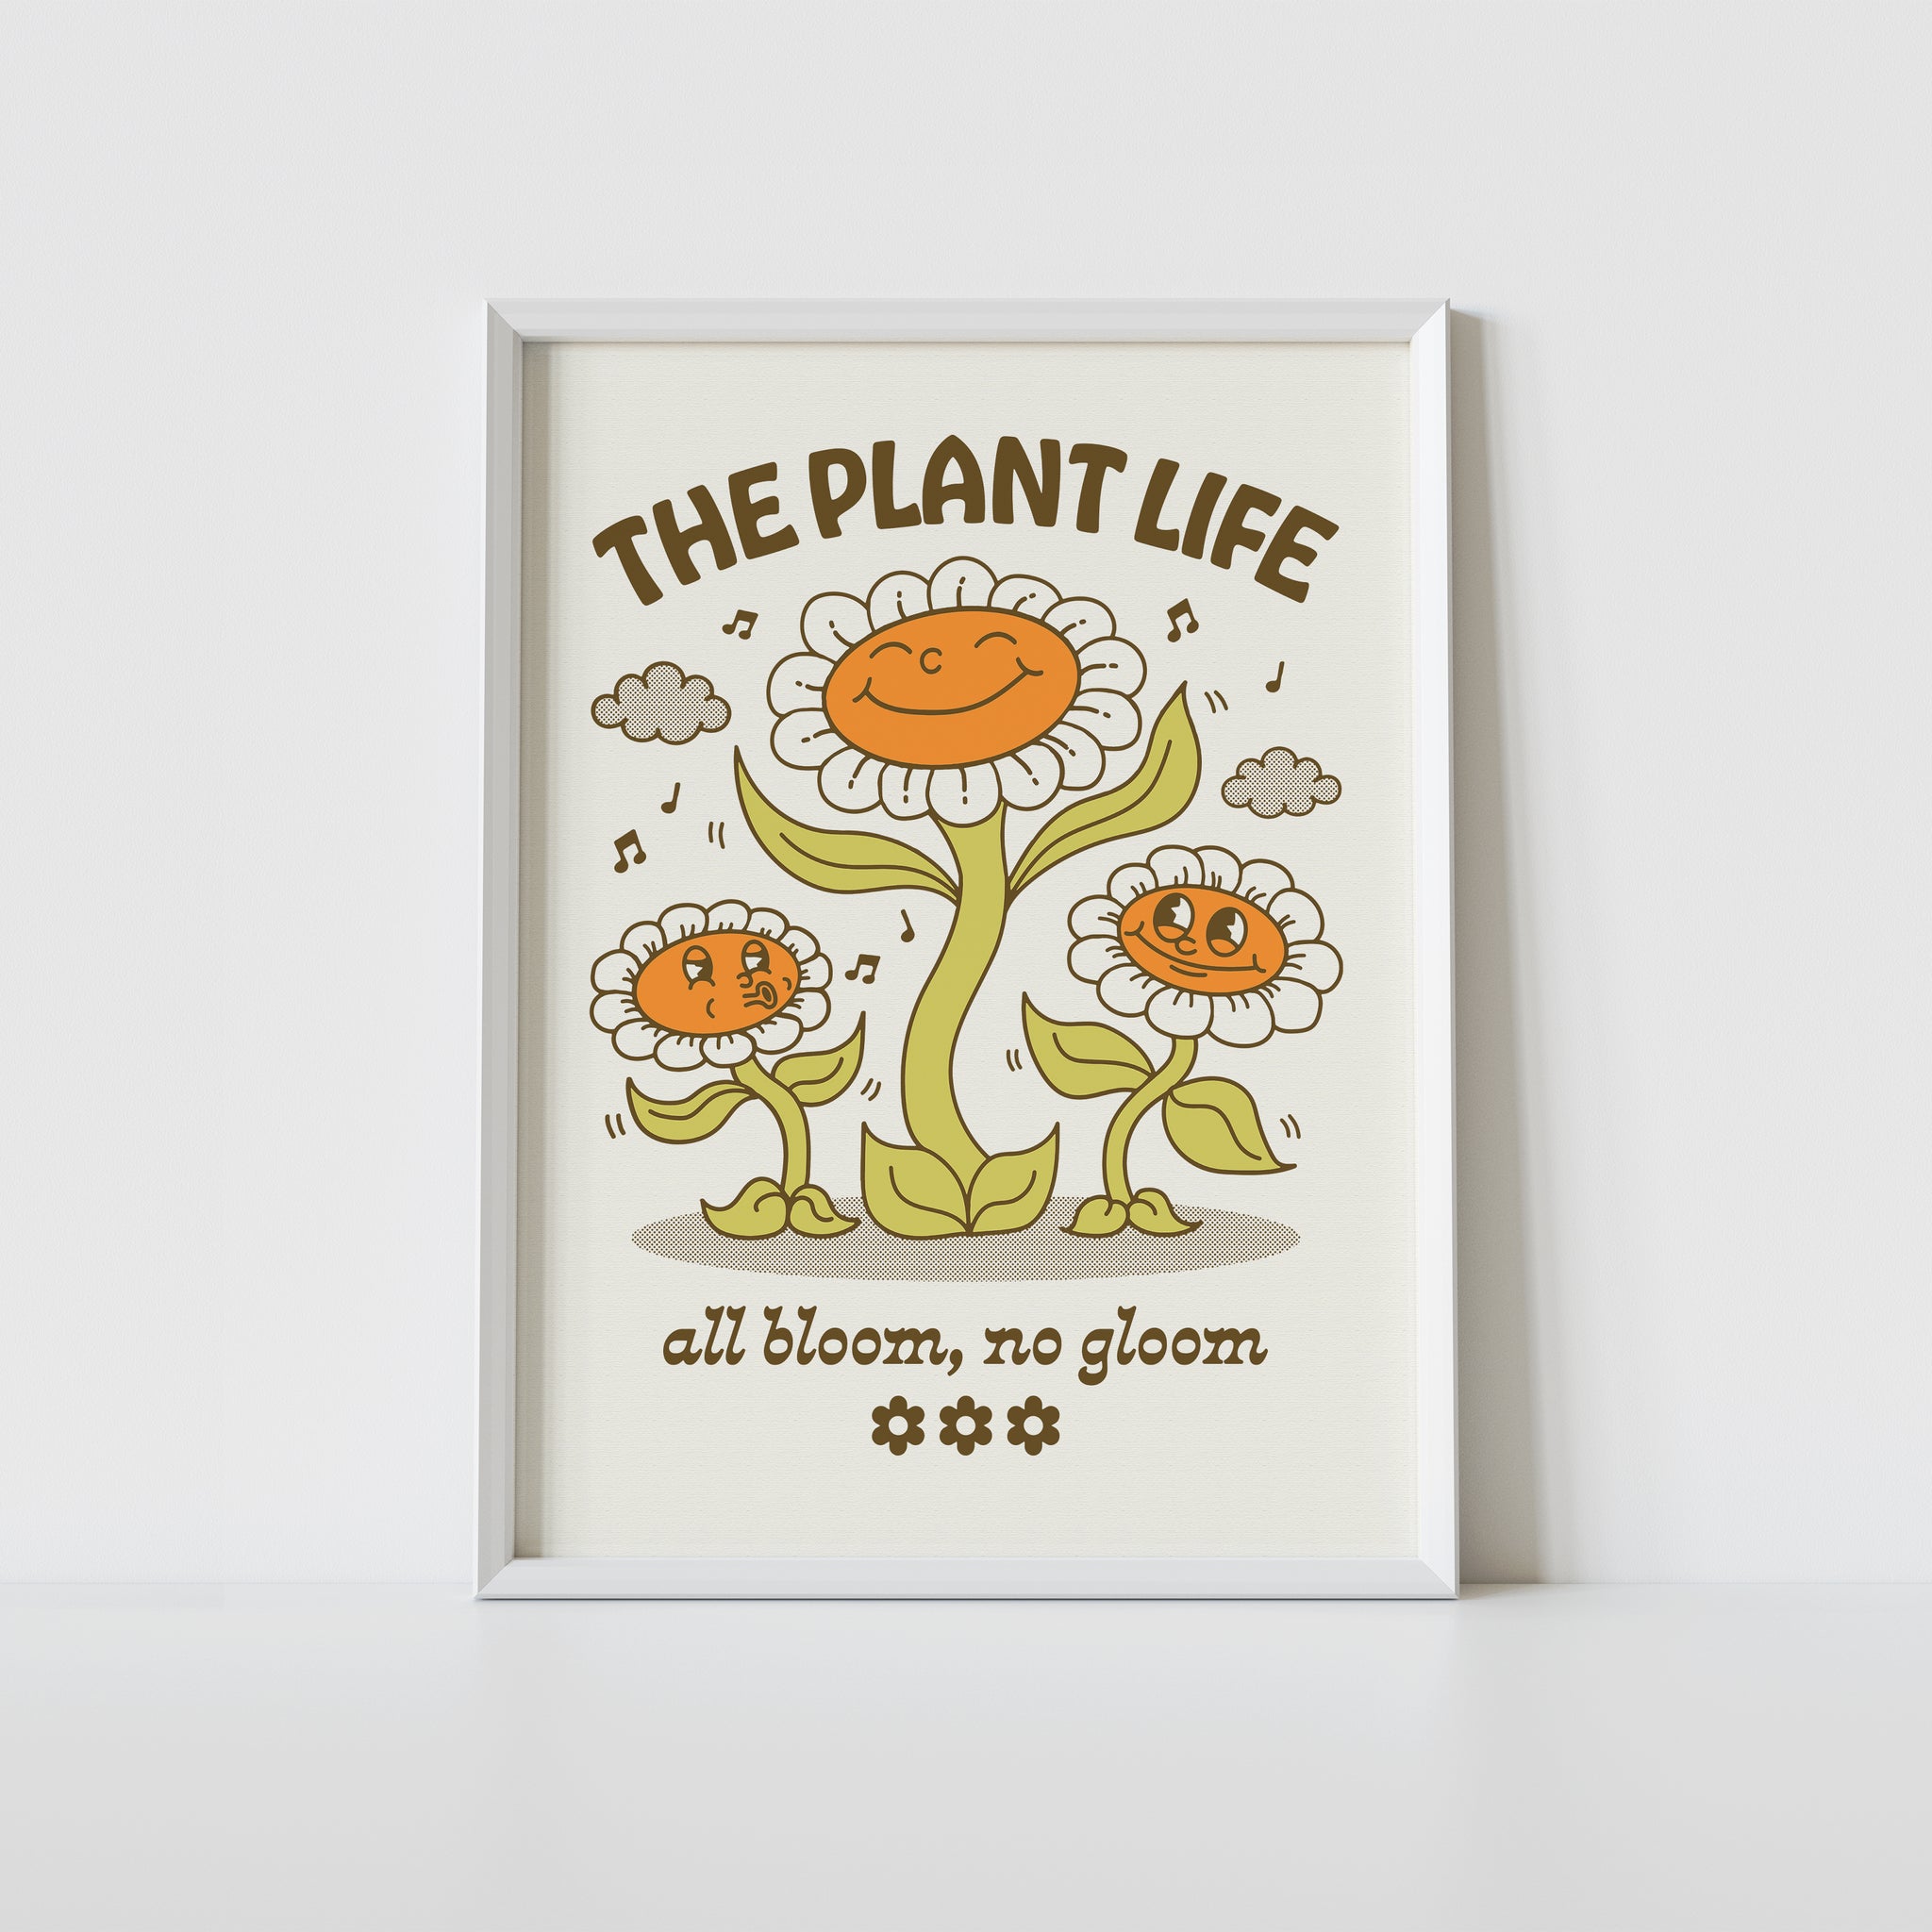 'The Plant Life' print